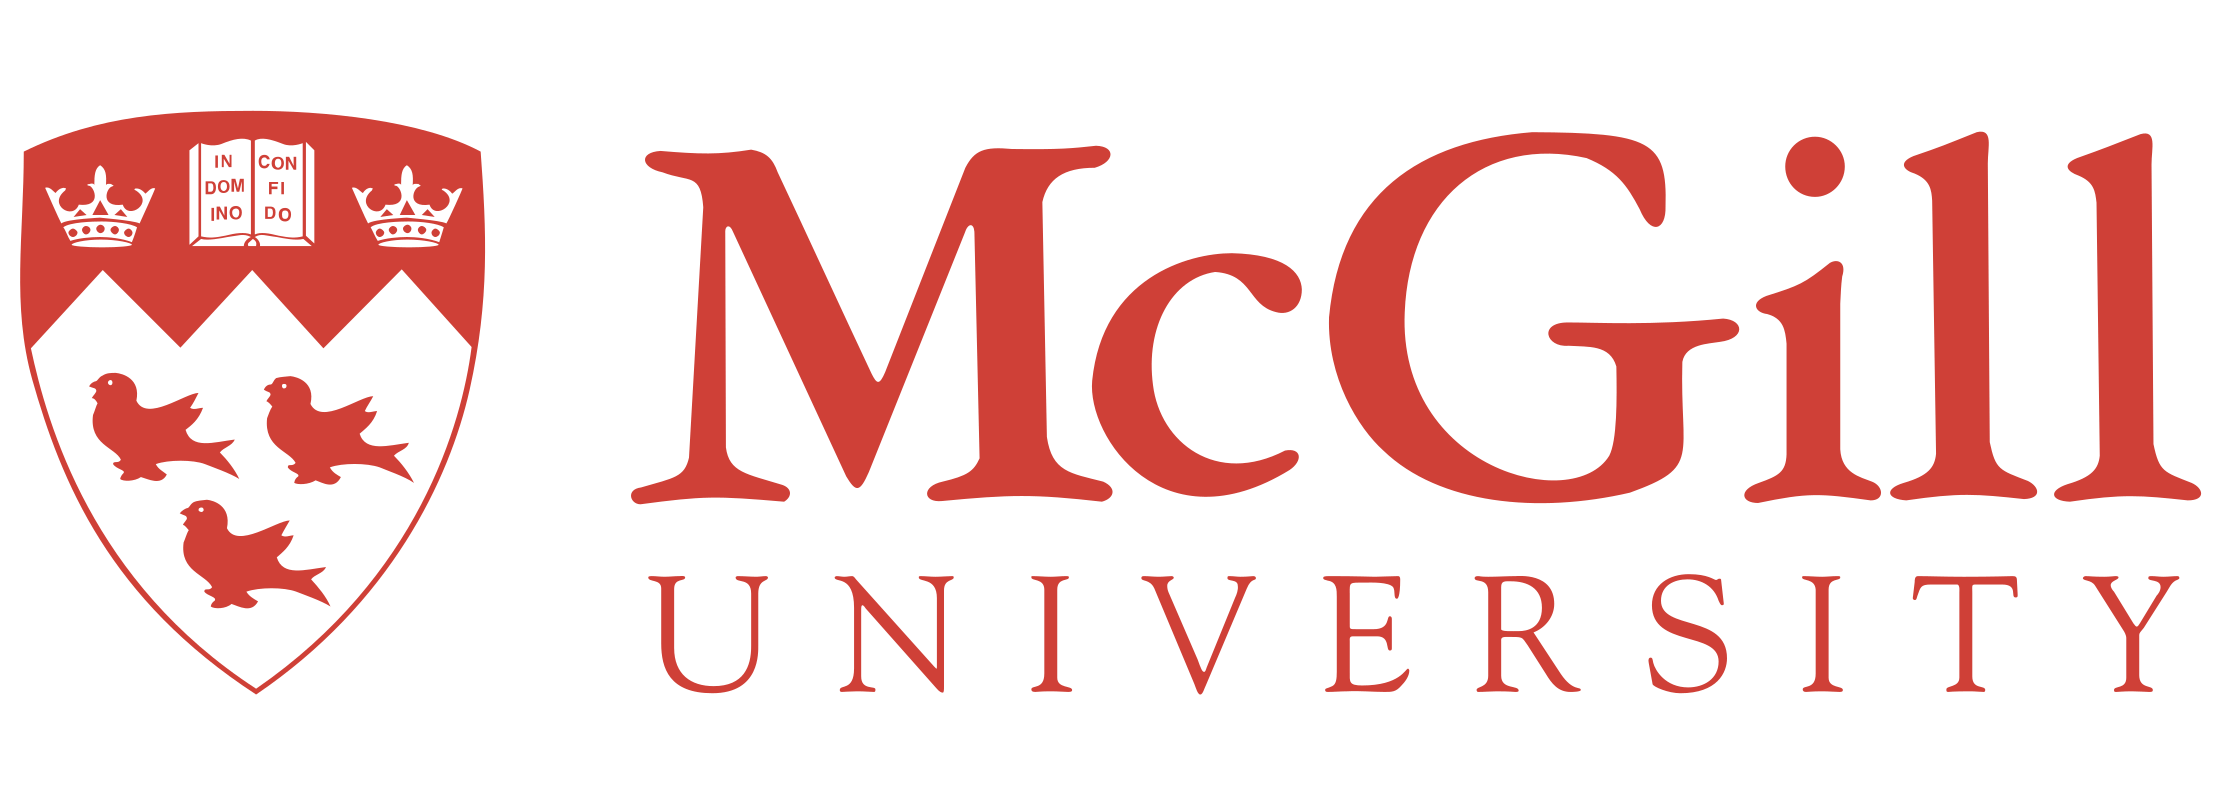 Mcgill university